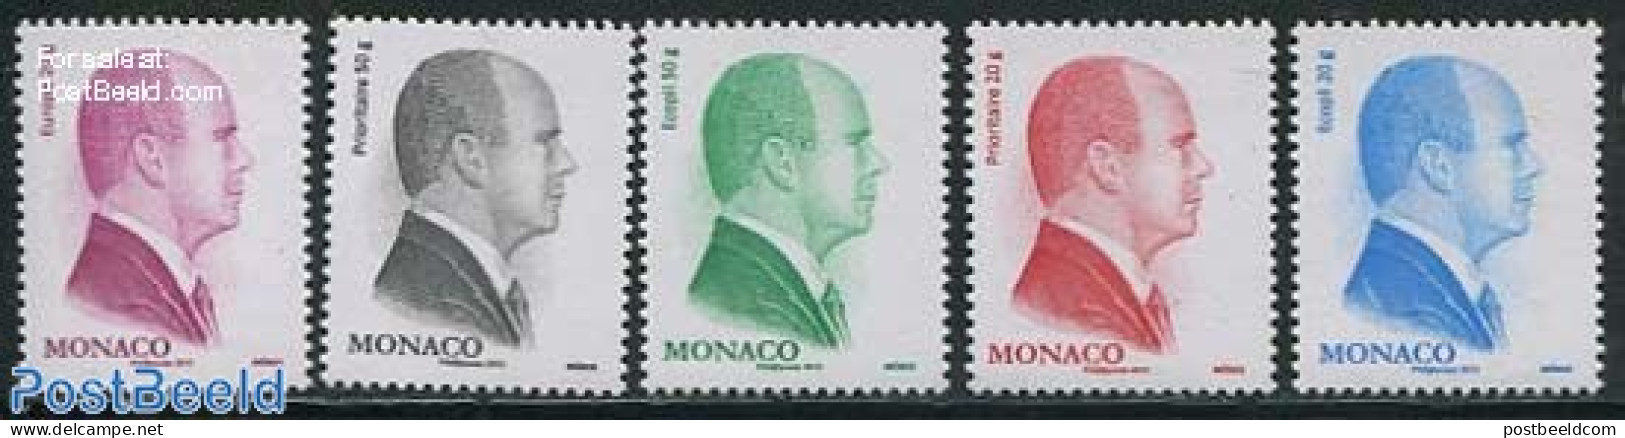 Monaco 2012 Definitives, Albert II 5v, Mint NH - Nuovi